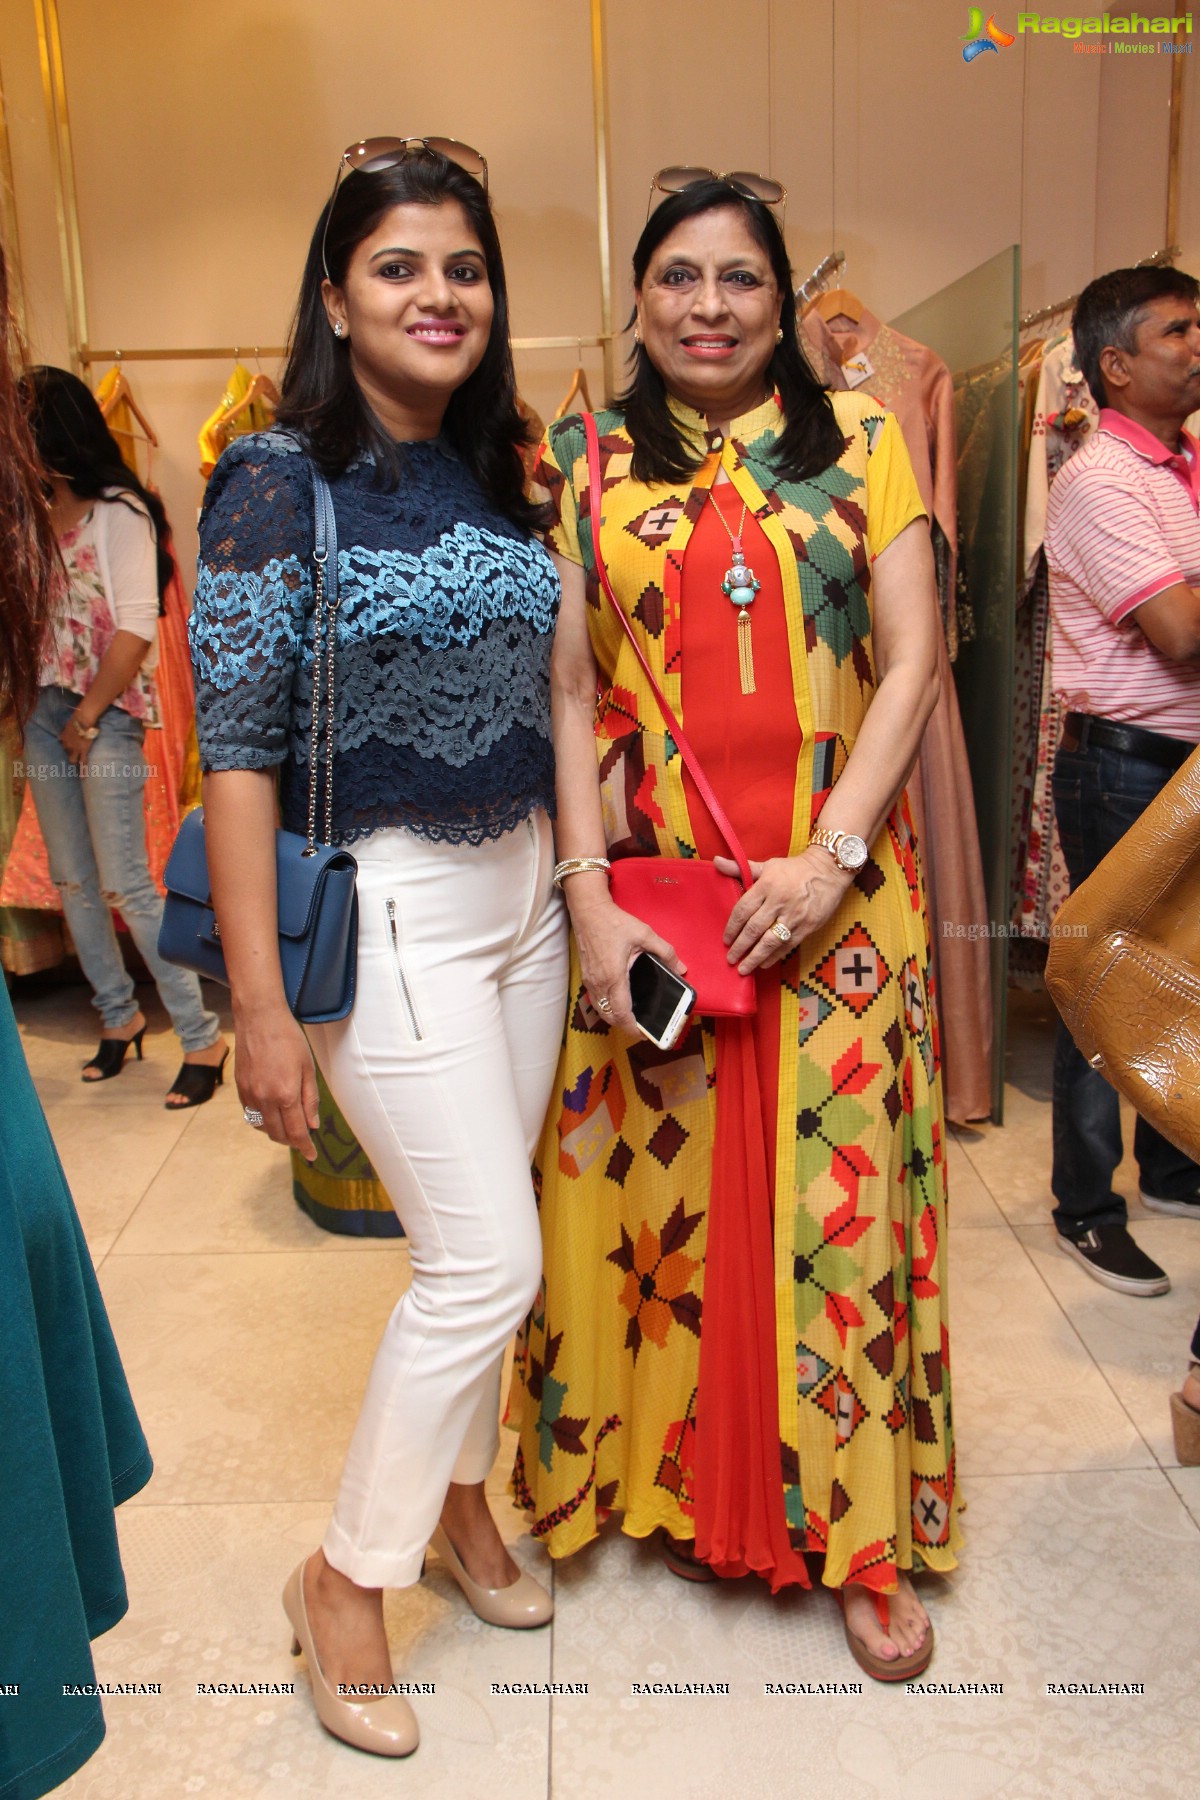 Lakme Fashion Week Festive Trends Launch at Elahe, Banjara Hills